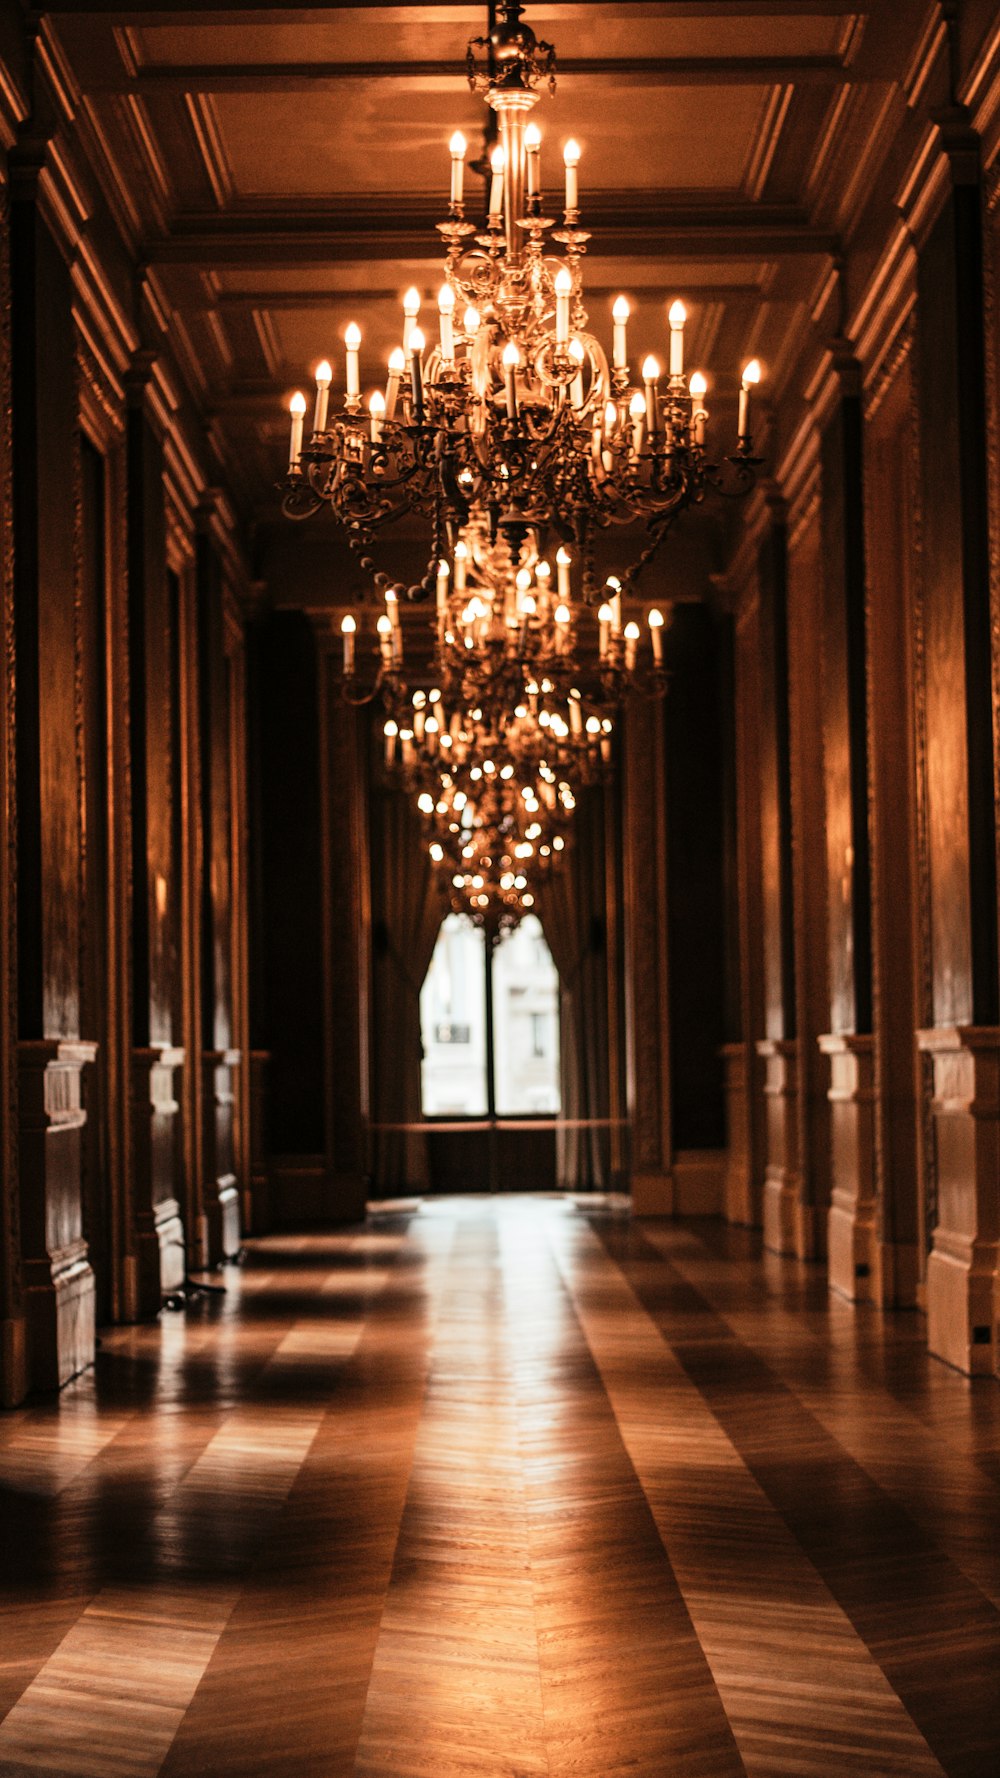 lightened chandelier inside the hall